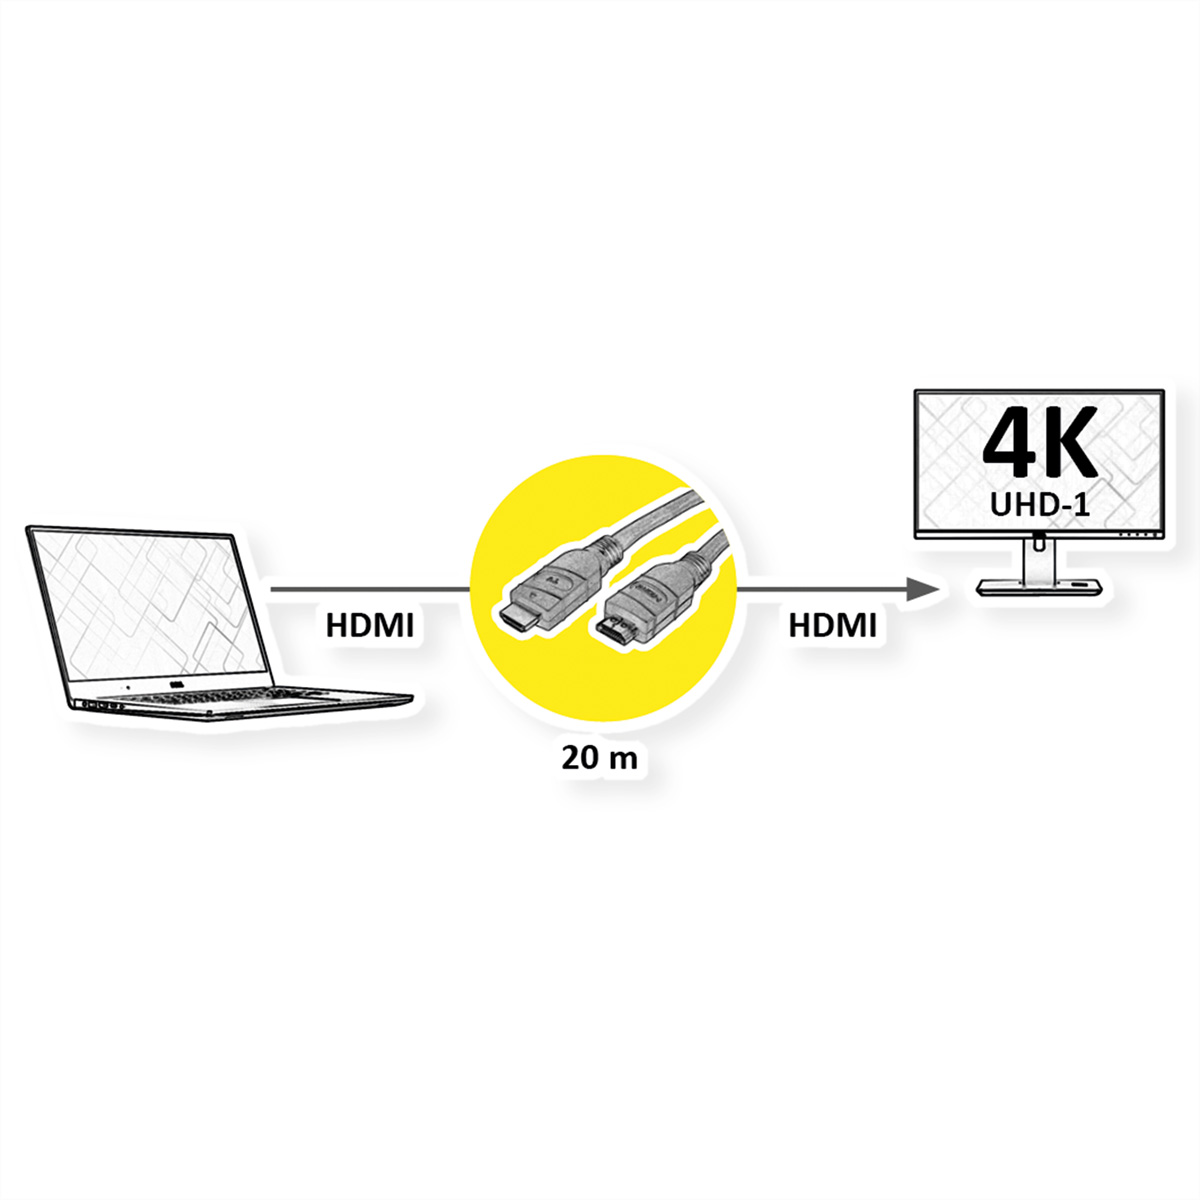 Kabel mit HDMI HD Repeater Ultra UHD 4K VALUE mit Ethernet HDMI Kabel